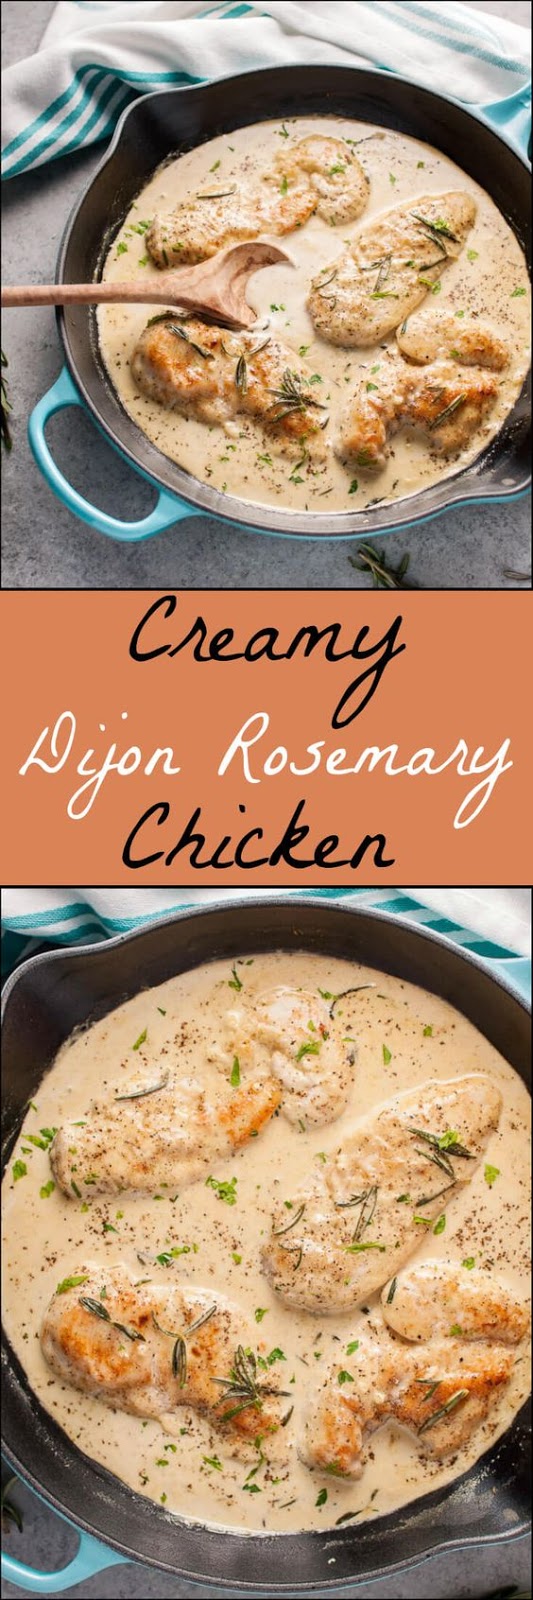 Creamy Dijon Rosemary Chicken Recipe – Home Inspiration and DIY Crafts ...